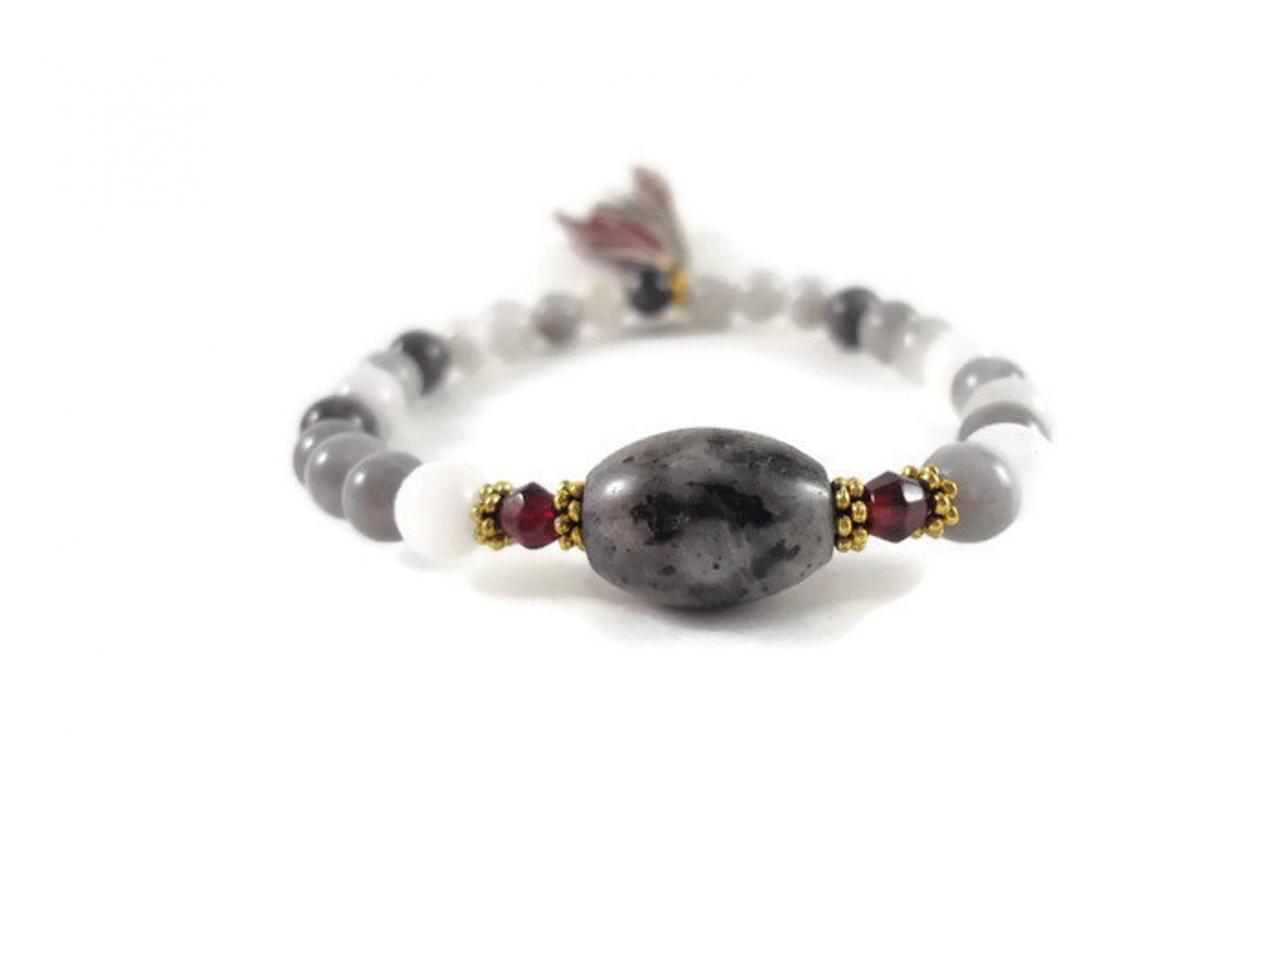 Birthstone Bracelet - January Birthstone - Garnet Bracelet - Black White Bracelet - Labradorite Boho Jewelry - Red Tassel Jewelry - Tassel